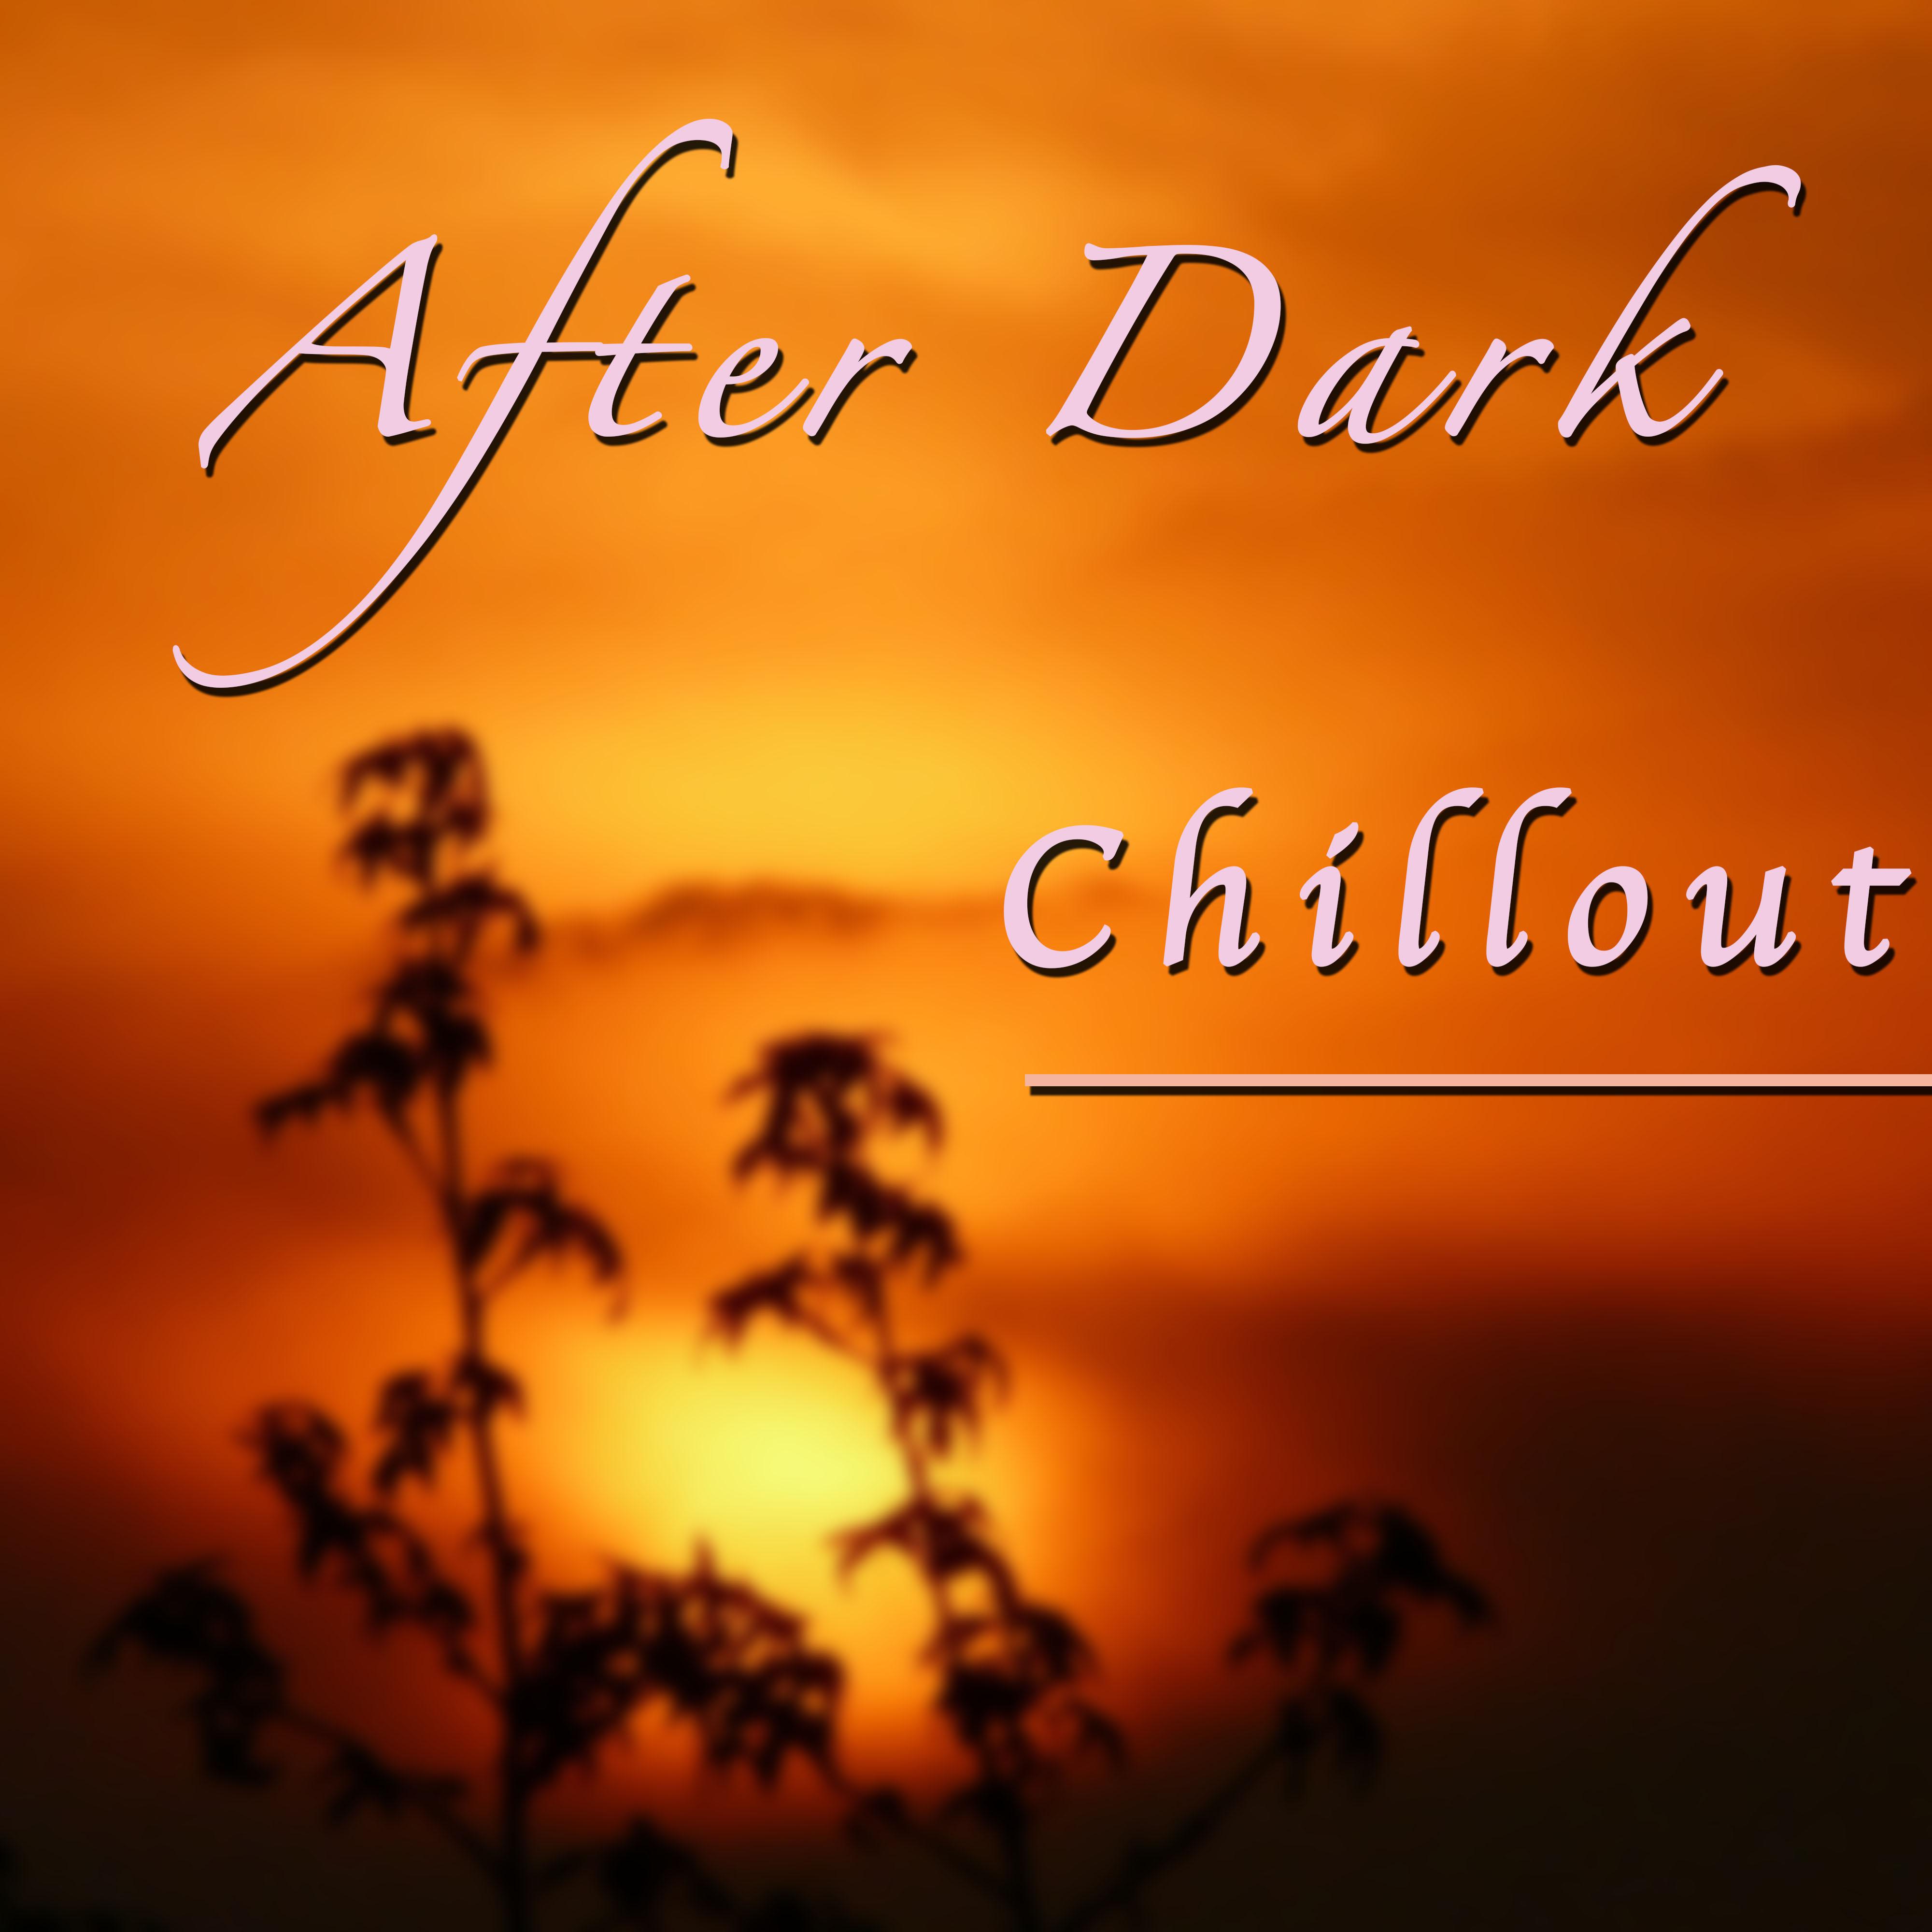 After Dark Chill Out Music - Best Buddha Mix Sounds